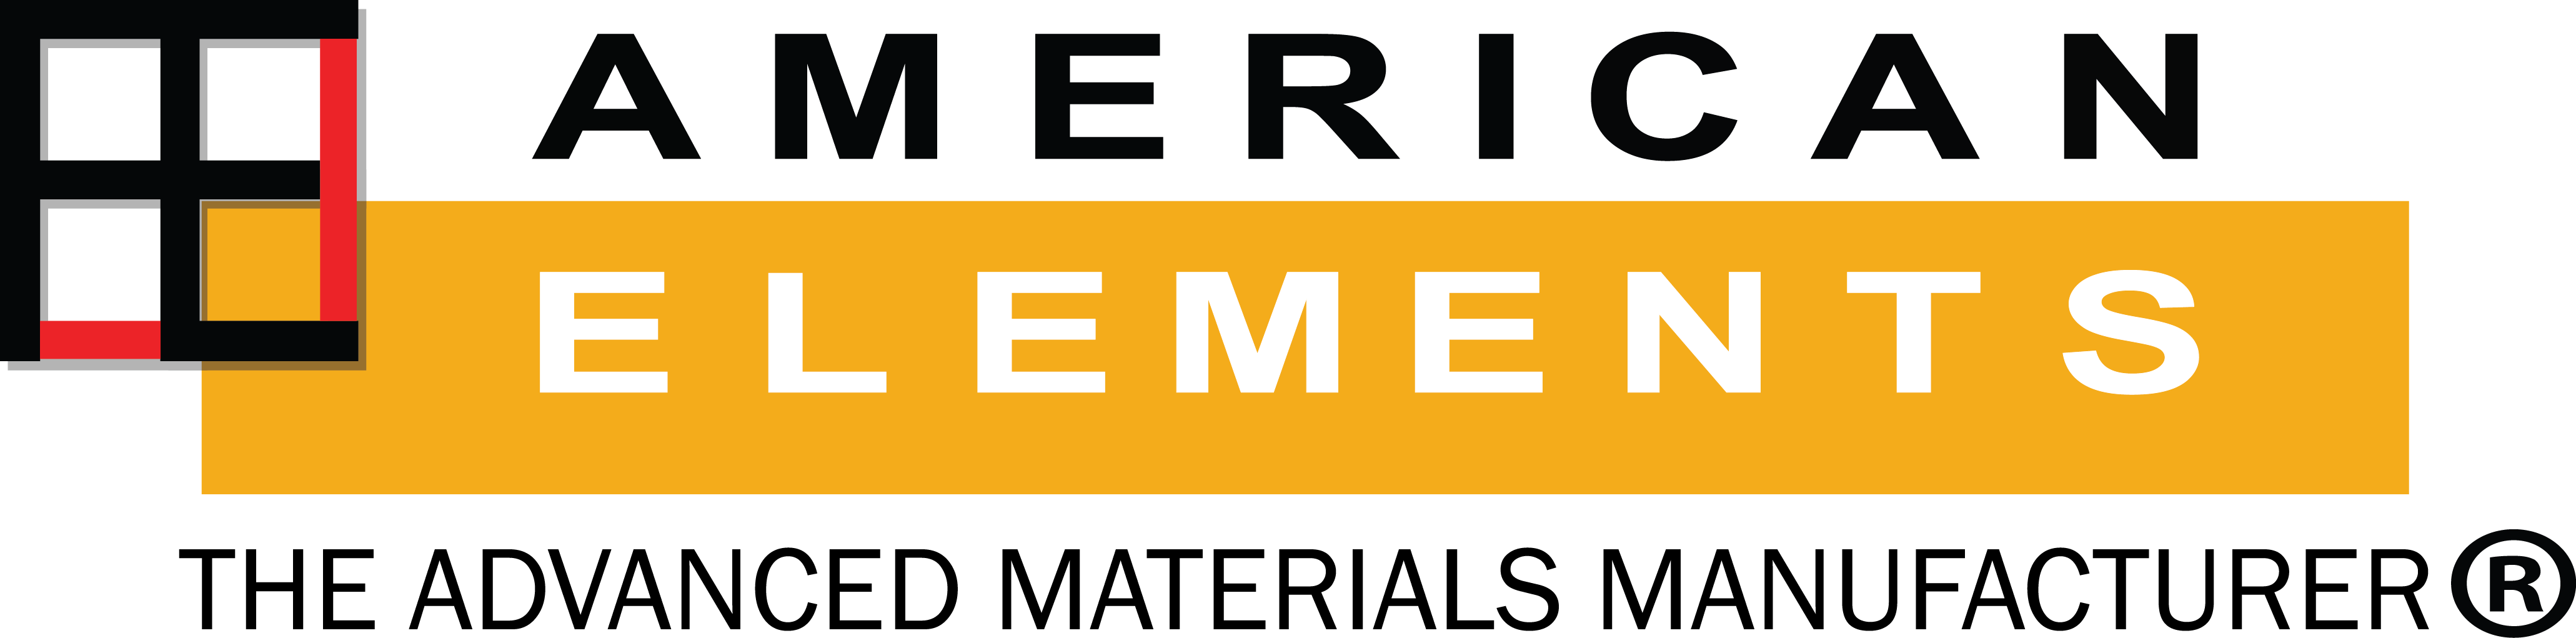 American Elements 2021